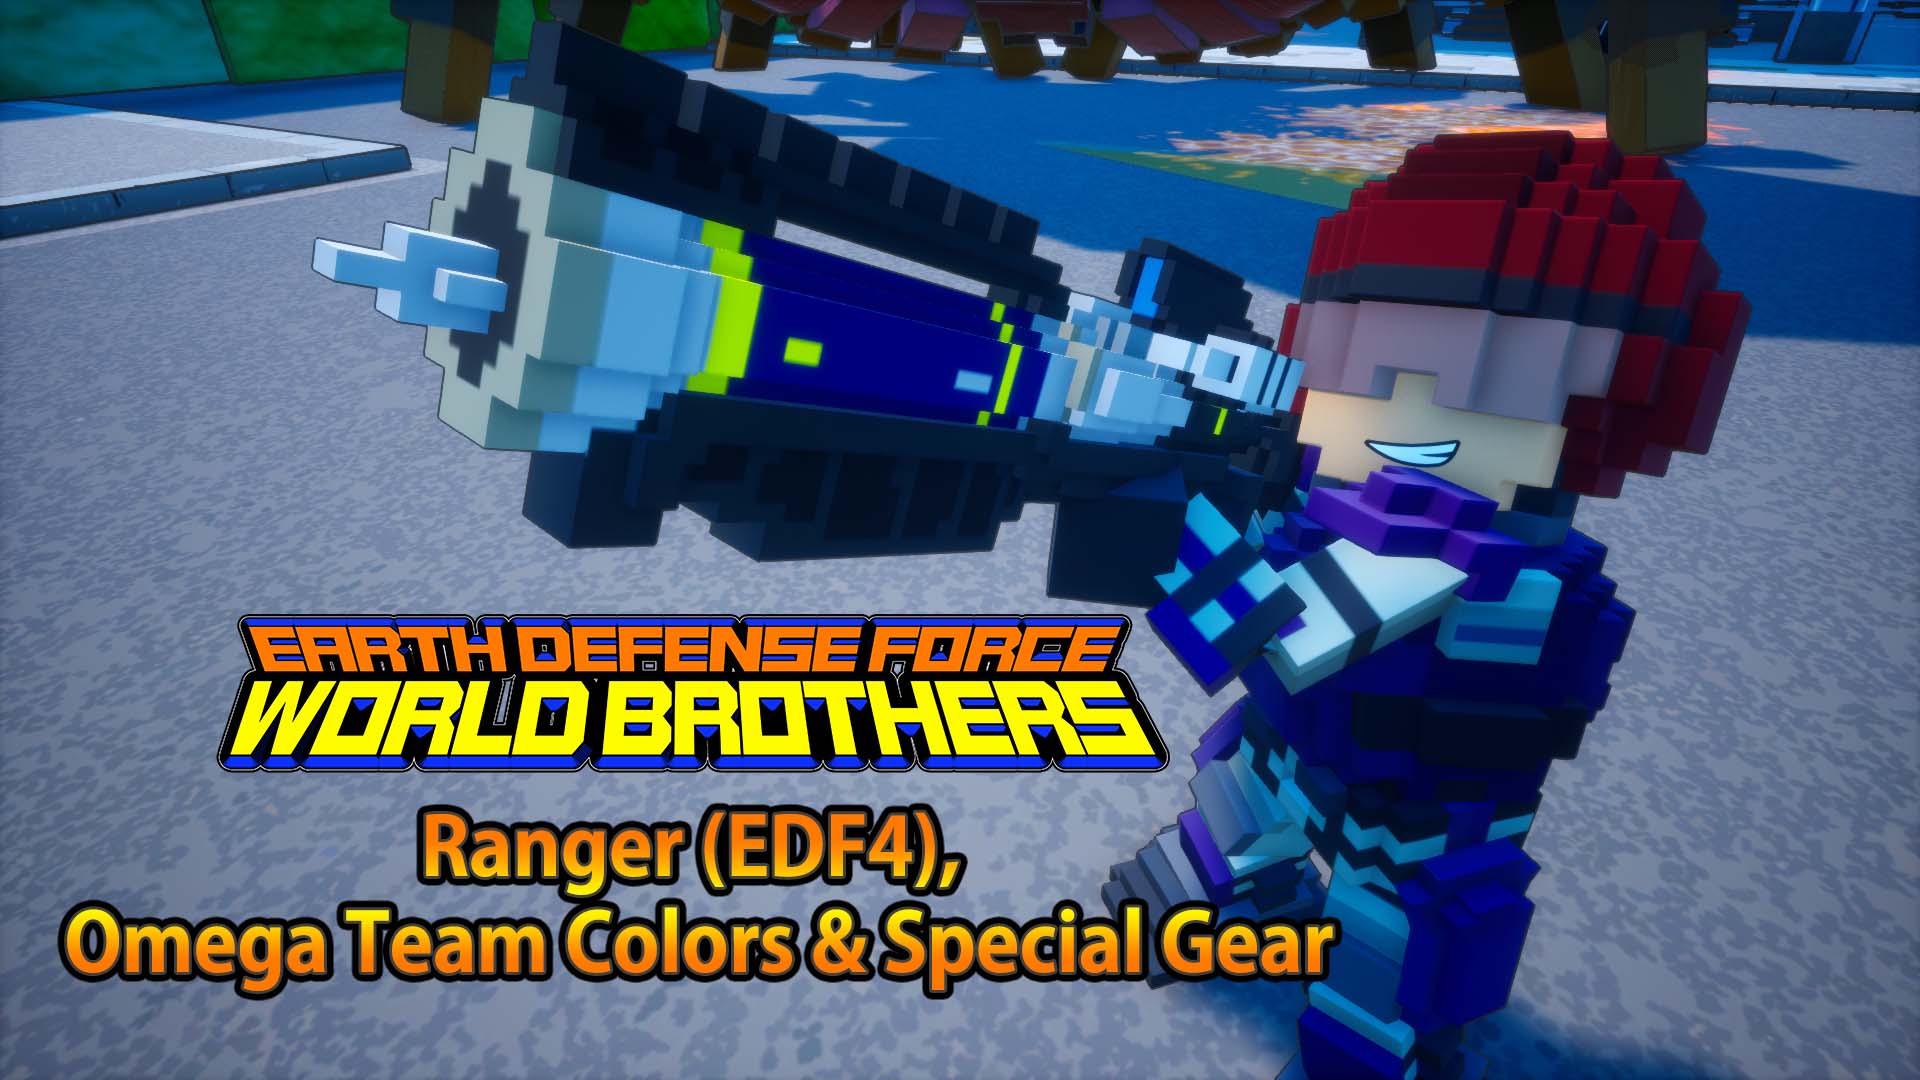 Ranger (EDF4), Omega Team Colors & Special Gear